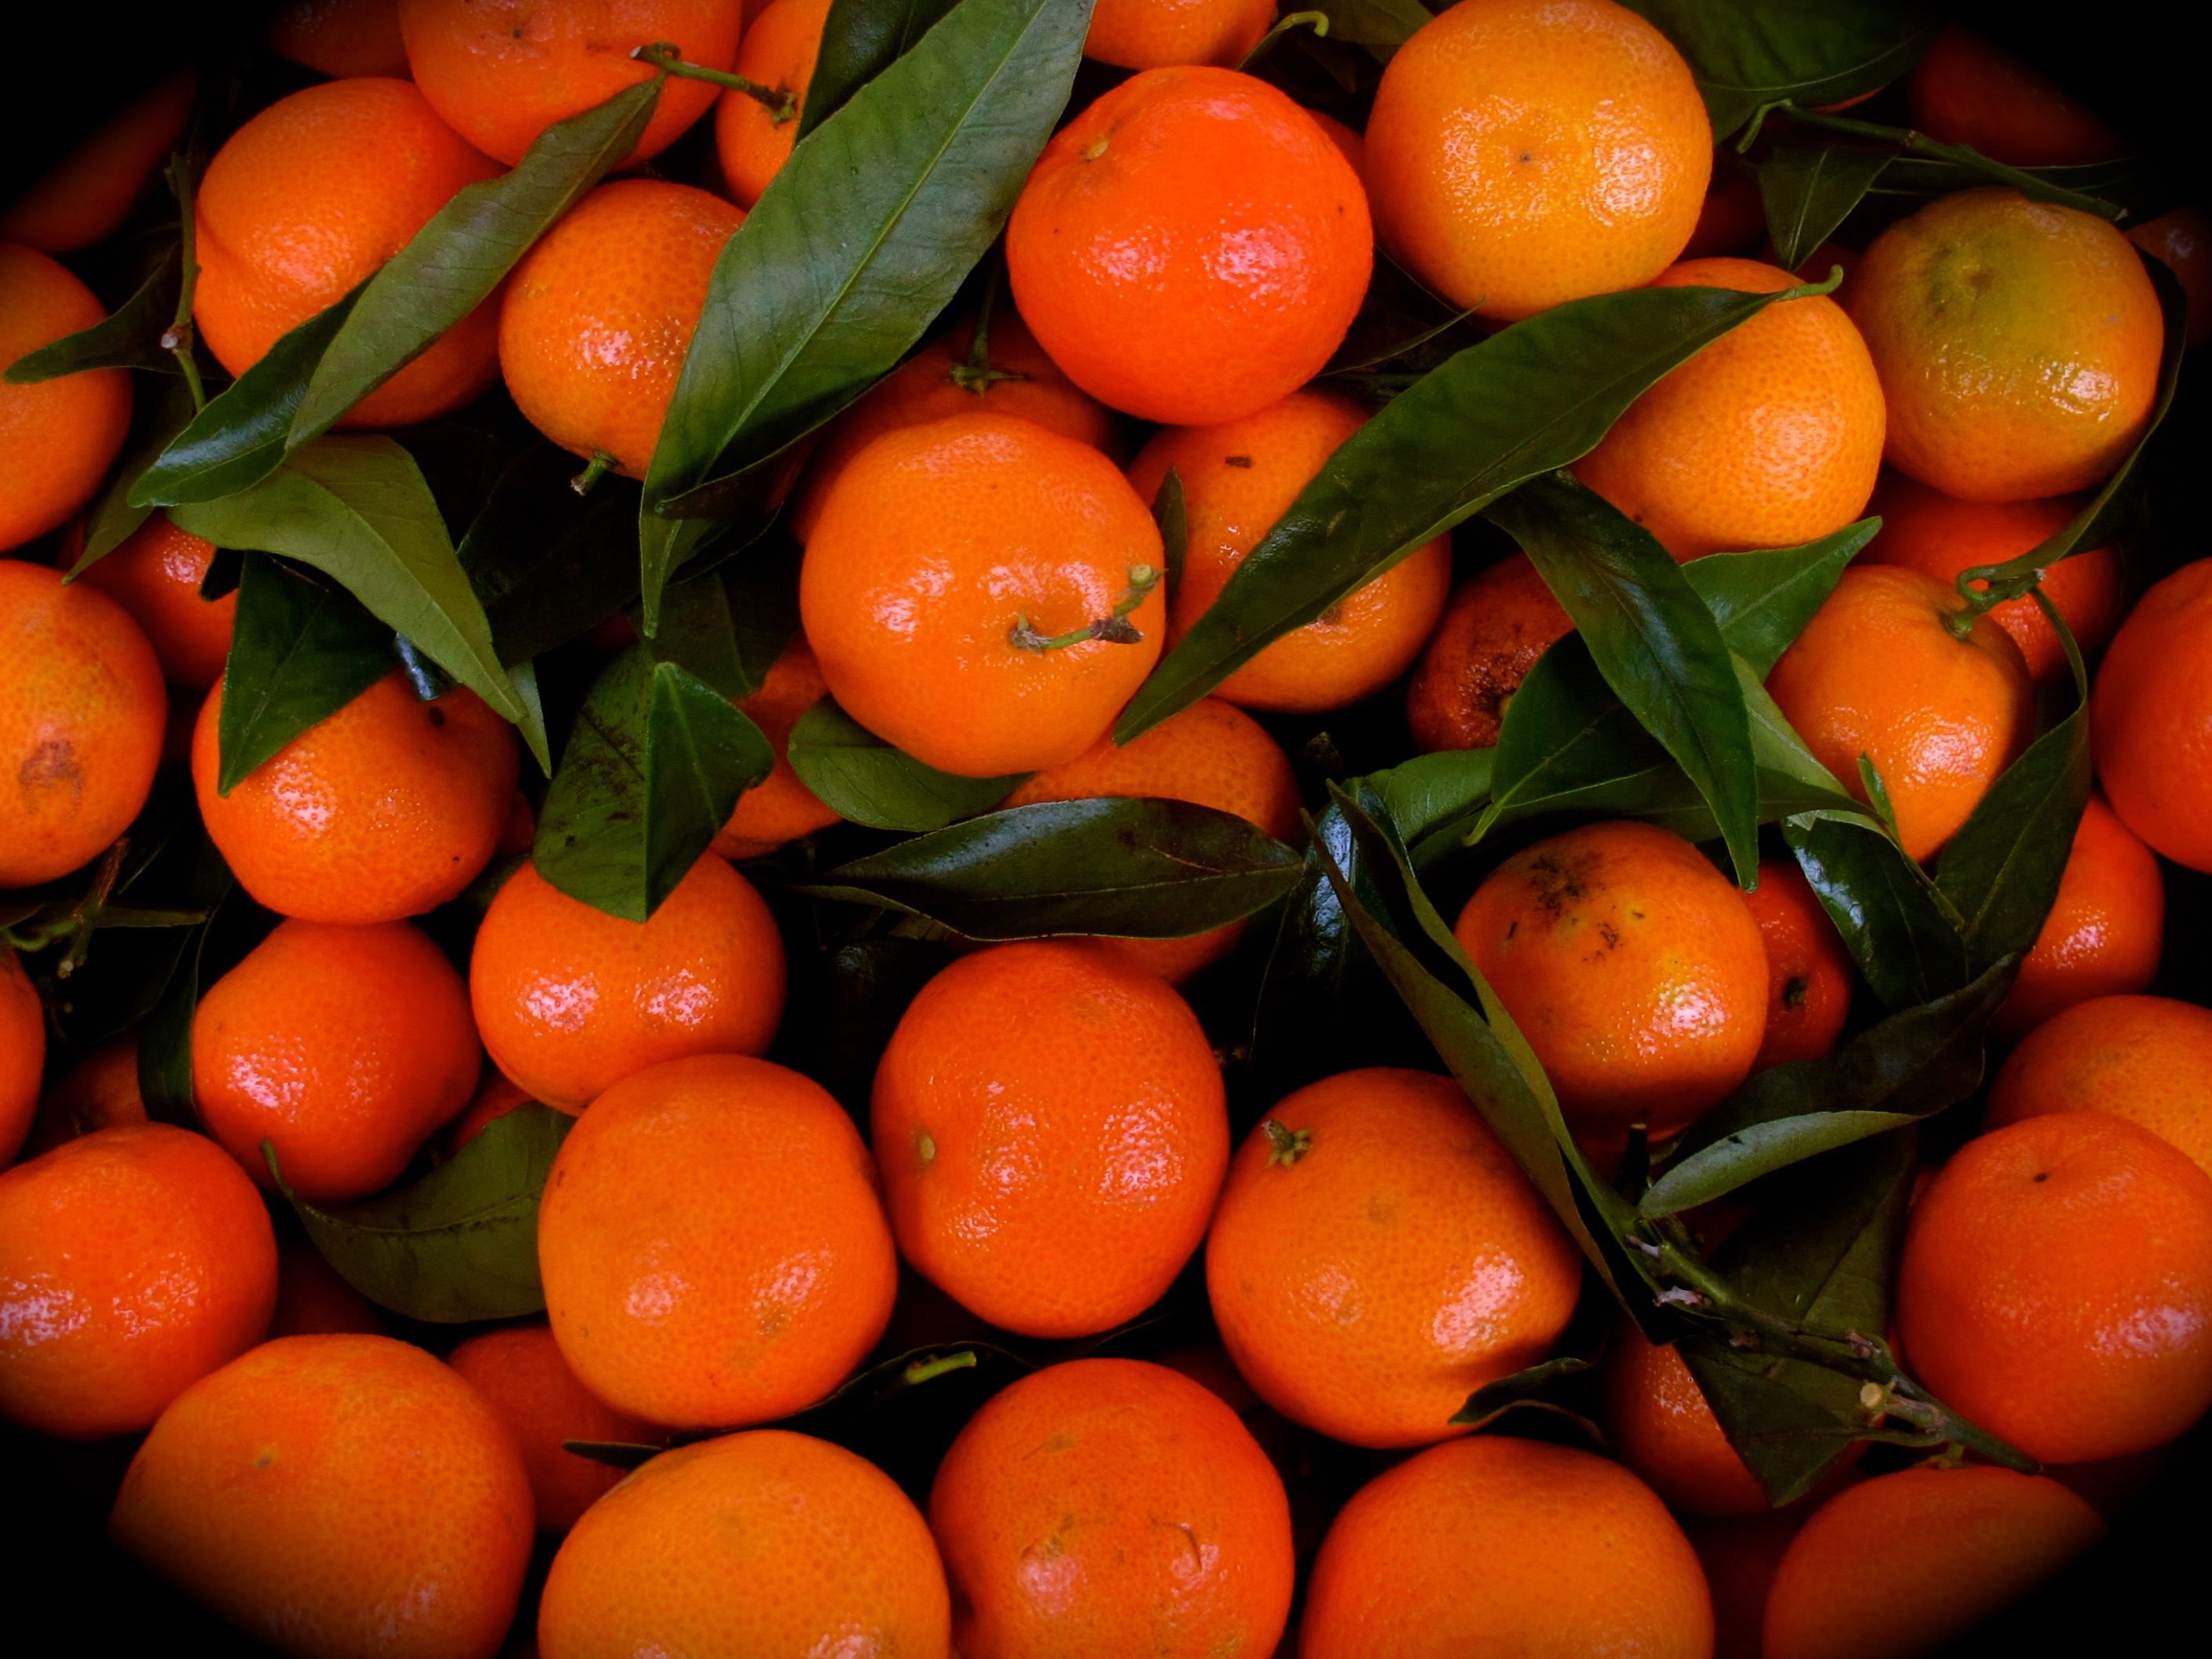 Производство мандаринов. Танжерин фрукт. Мандарины. Мандарины много. Оранжевый цвет.